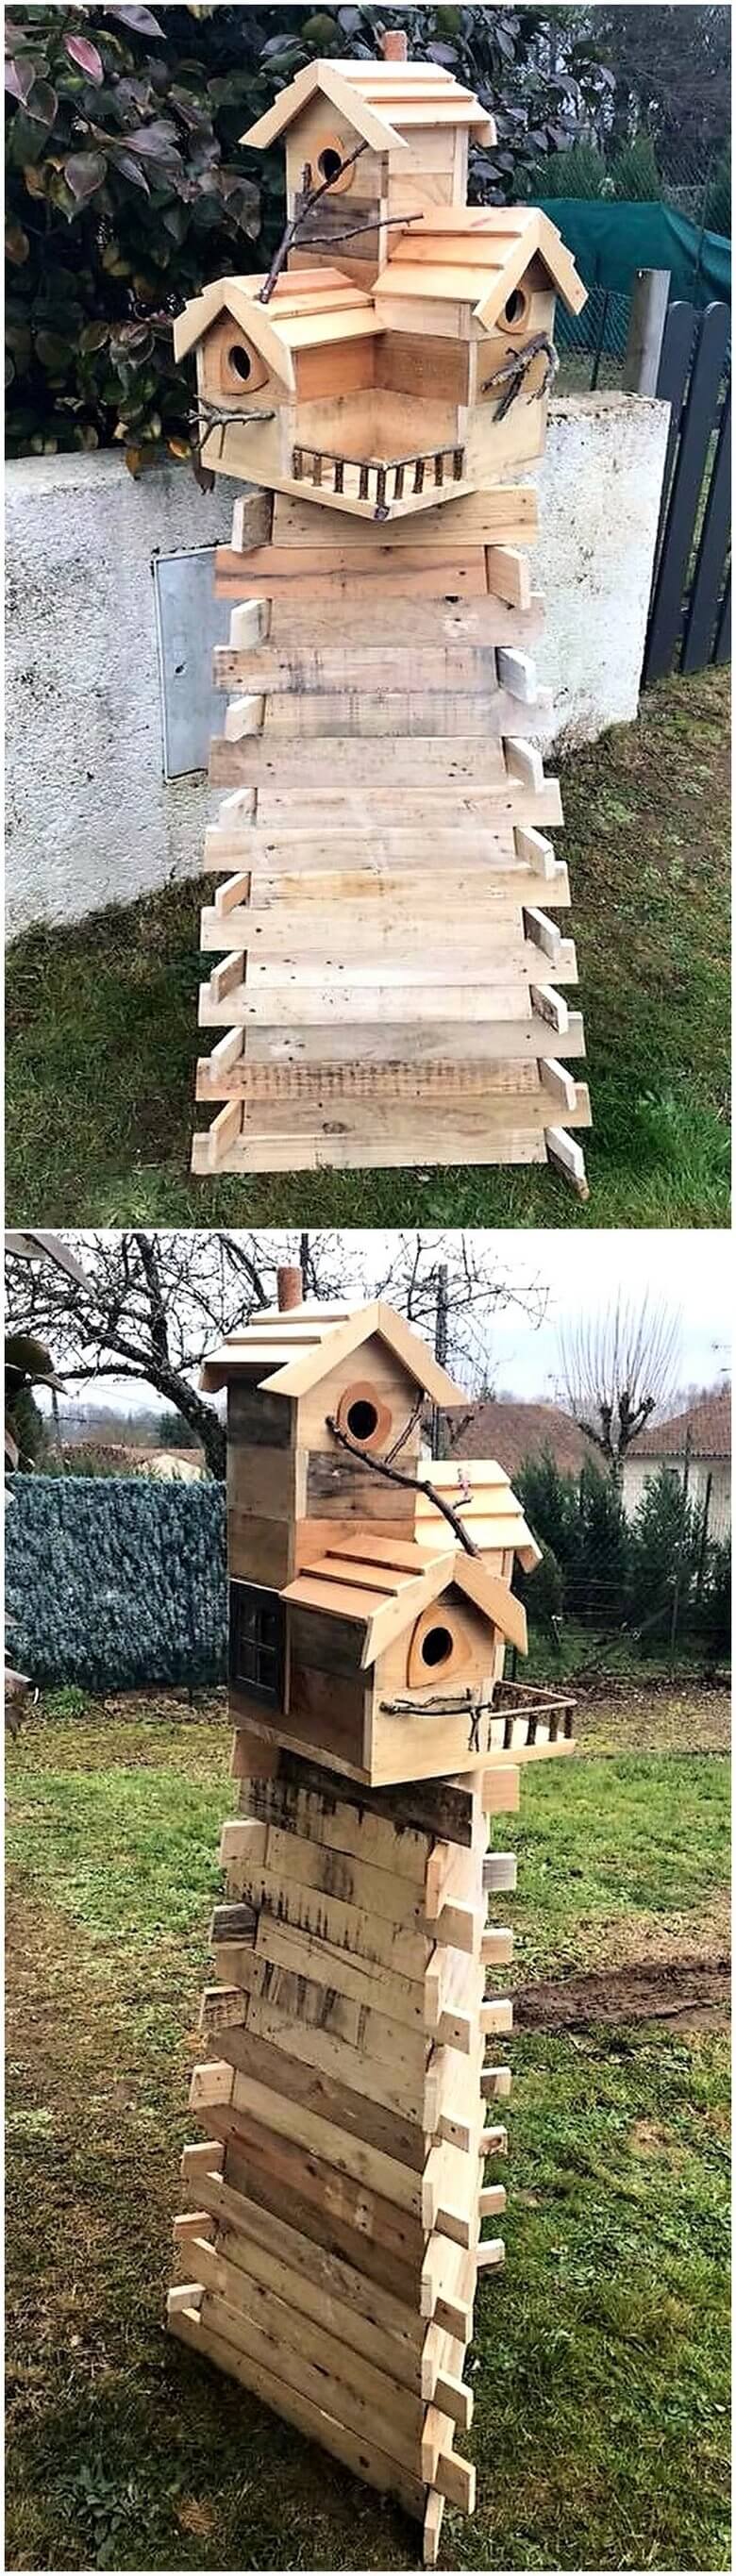 pallet birdhouse idea